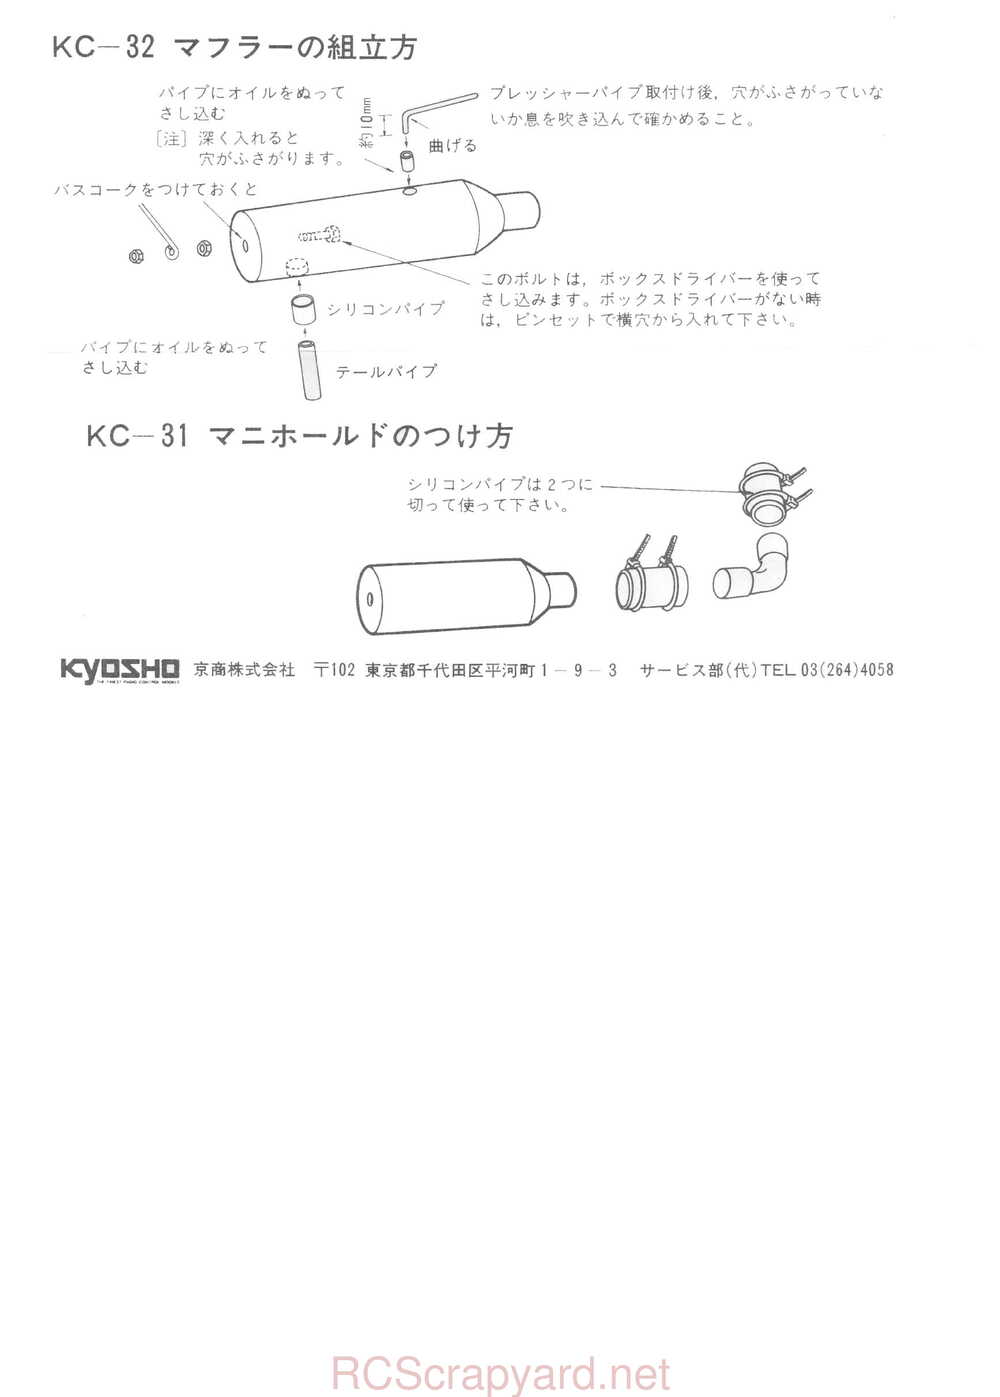 Kyosho - 3058-3059 - Vanning - Presto - Integra-4WD - V2 - Manual - Page 19